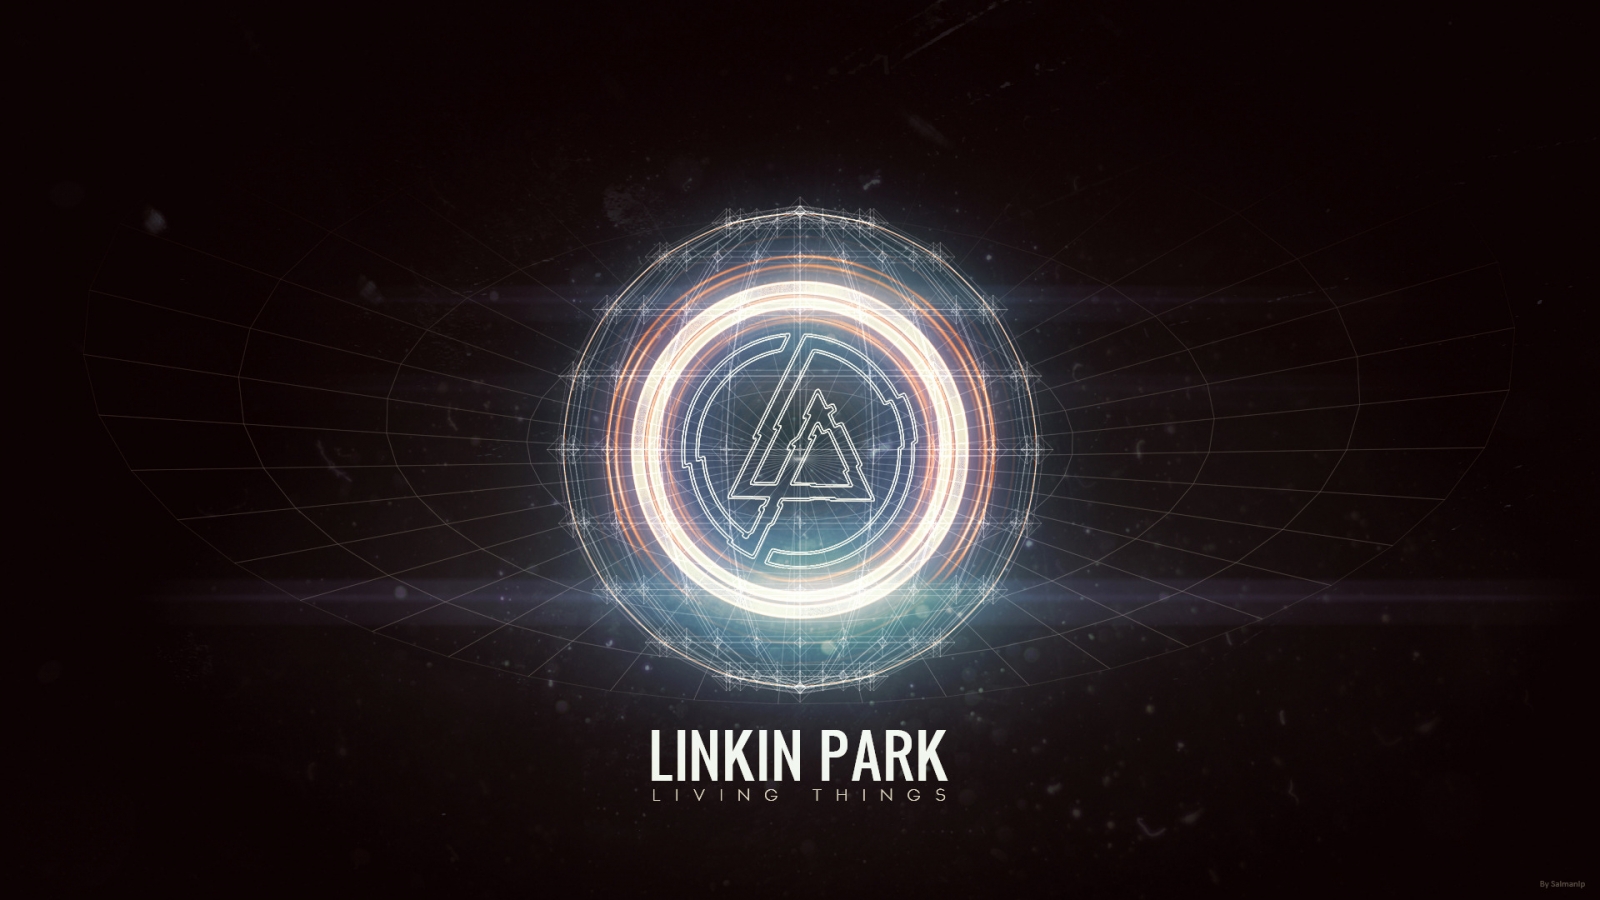 Linkin Park Living Things for 1600 x 900 HDTV resolution